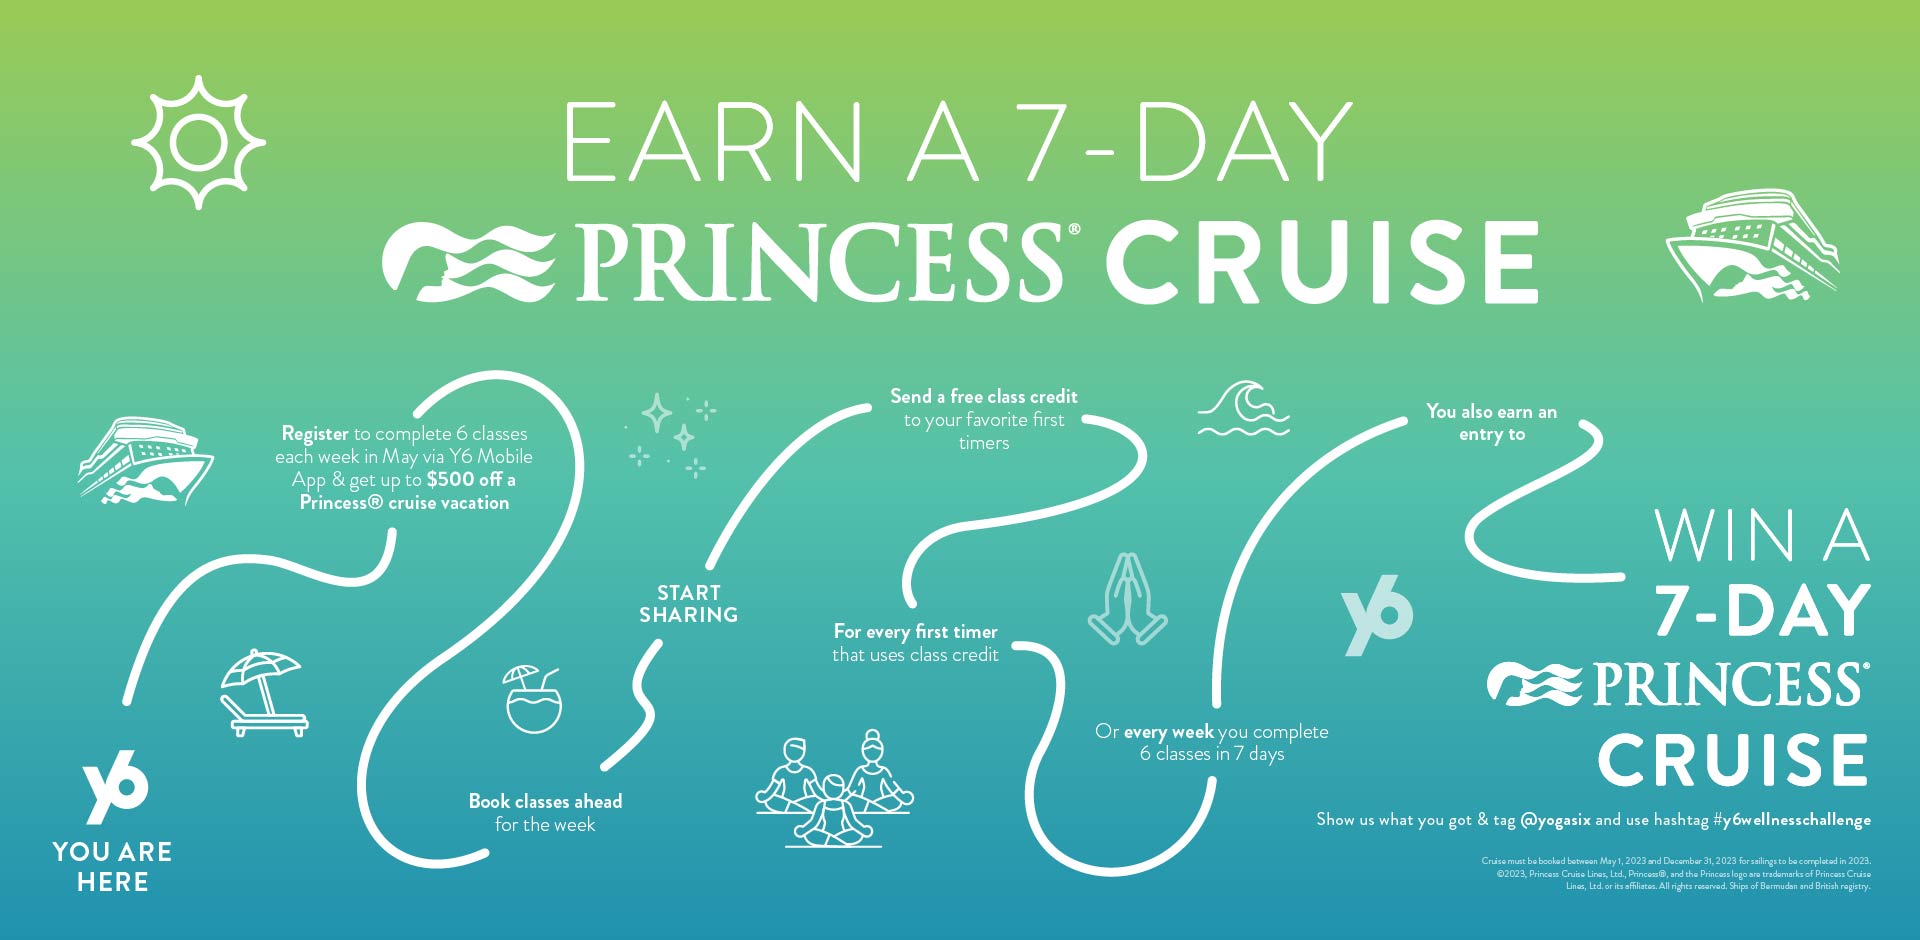 YogaSix | Princess Cruise Contest